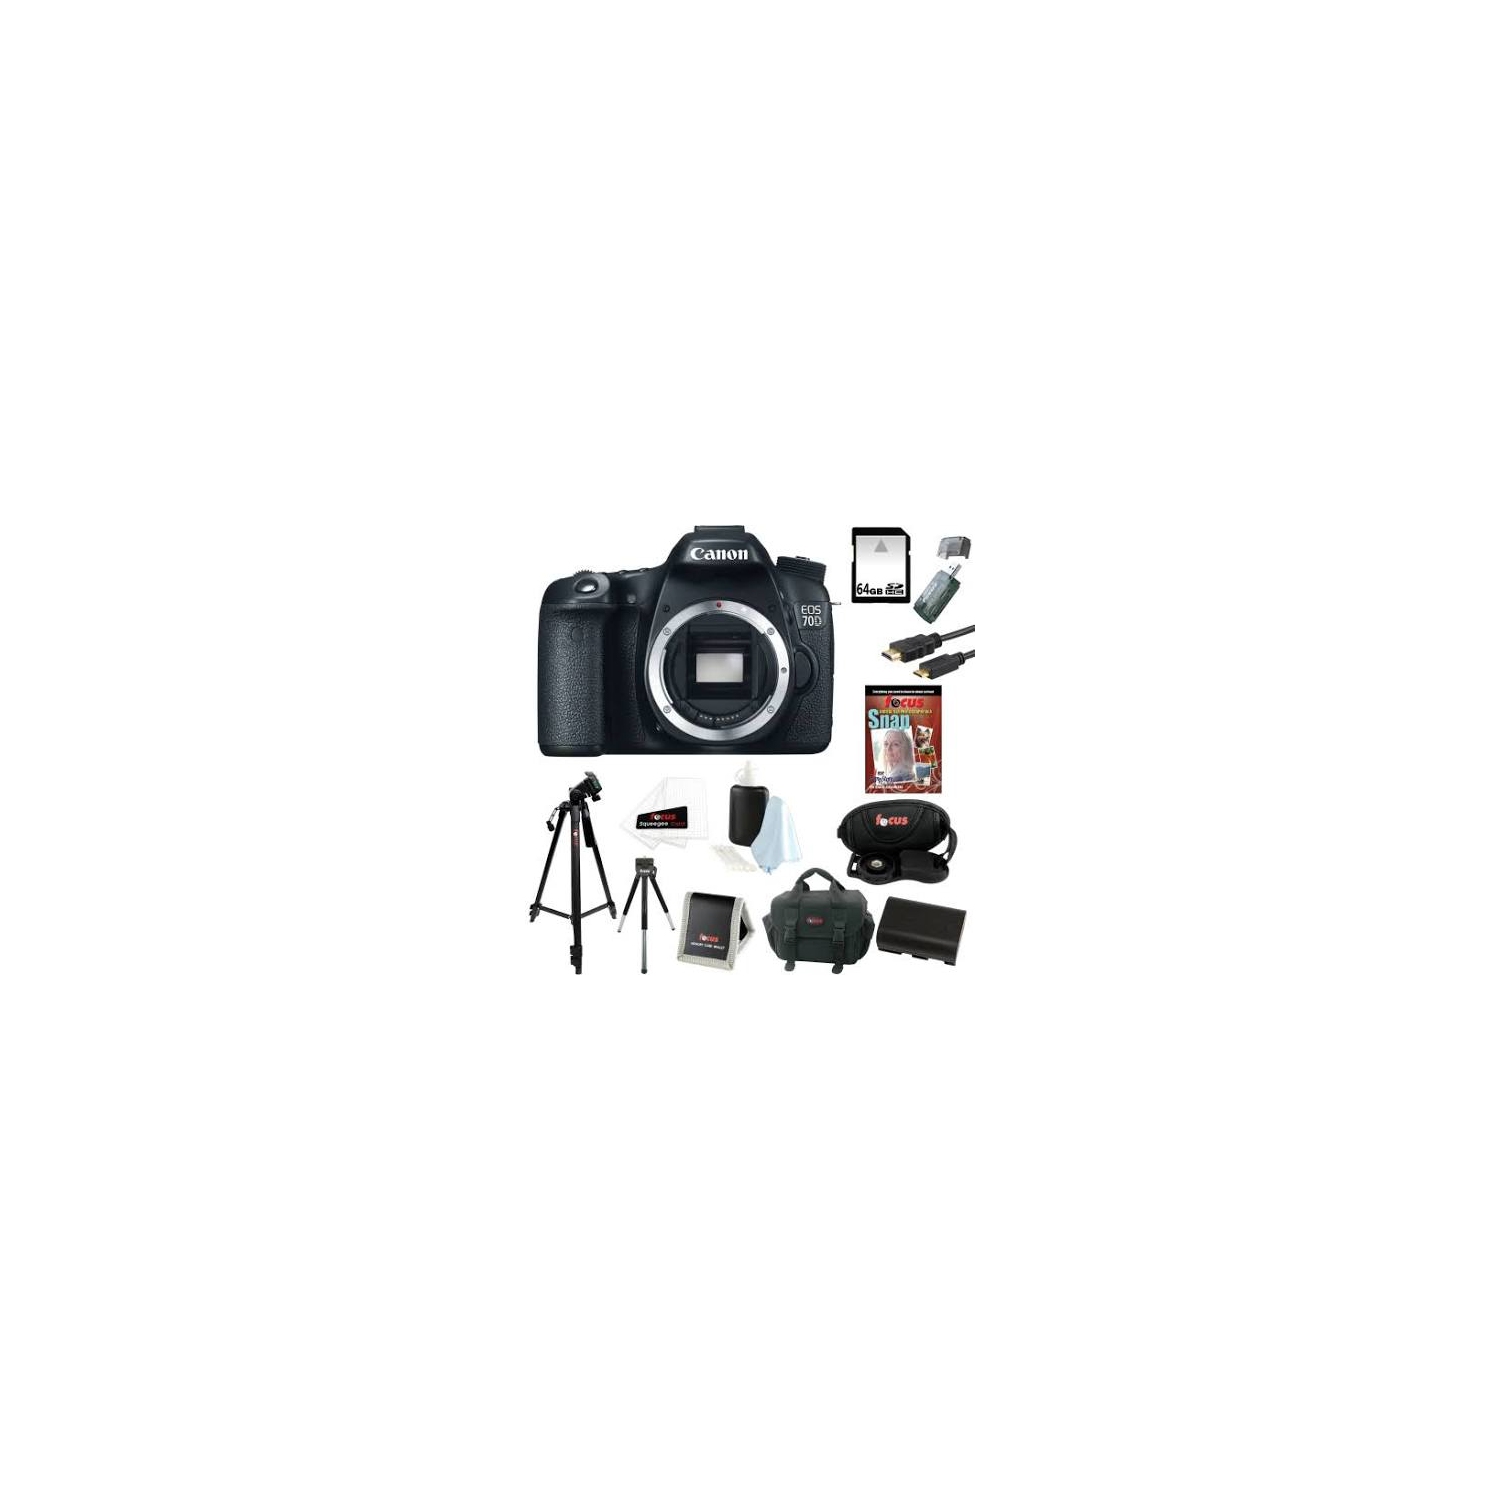 Canon EOS 70D 20.2 MP DSLR Camera Body with 64GB SDHC Accessory Bundle - US Version w/ Seller Warranty